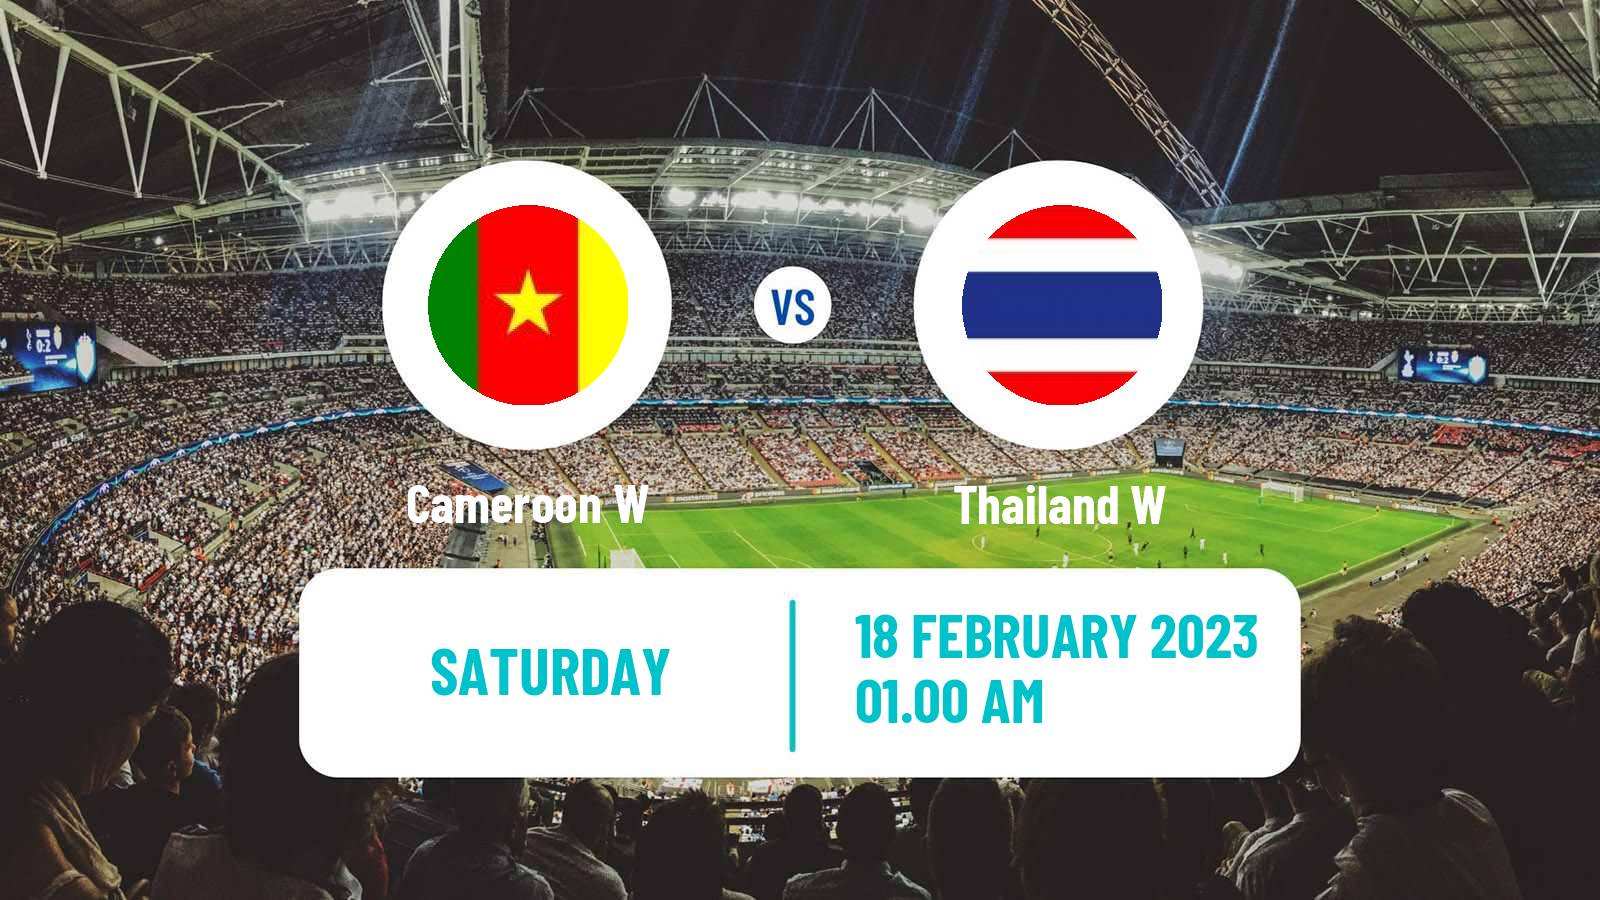 Soccer FIFA World Cup Women Cameroon W - Thailand W